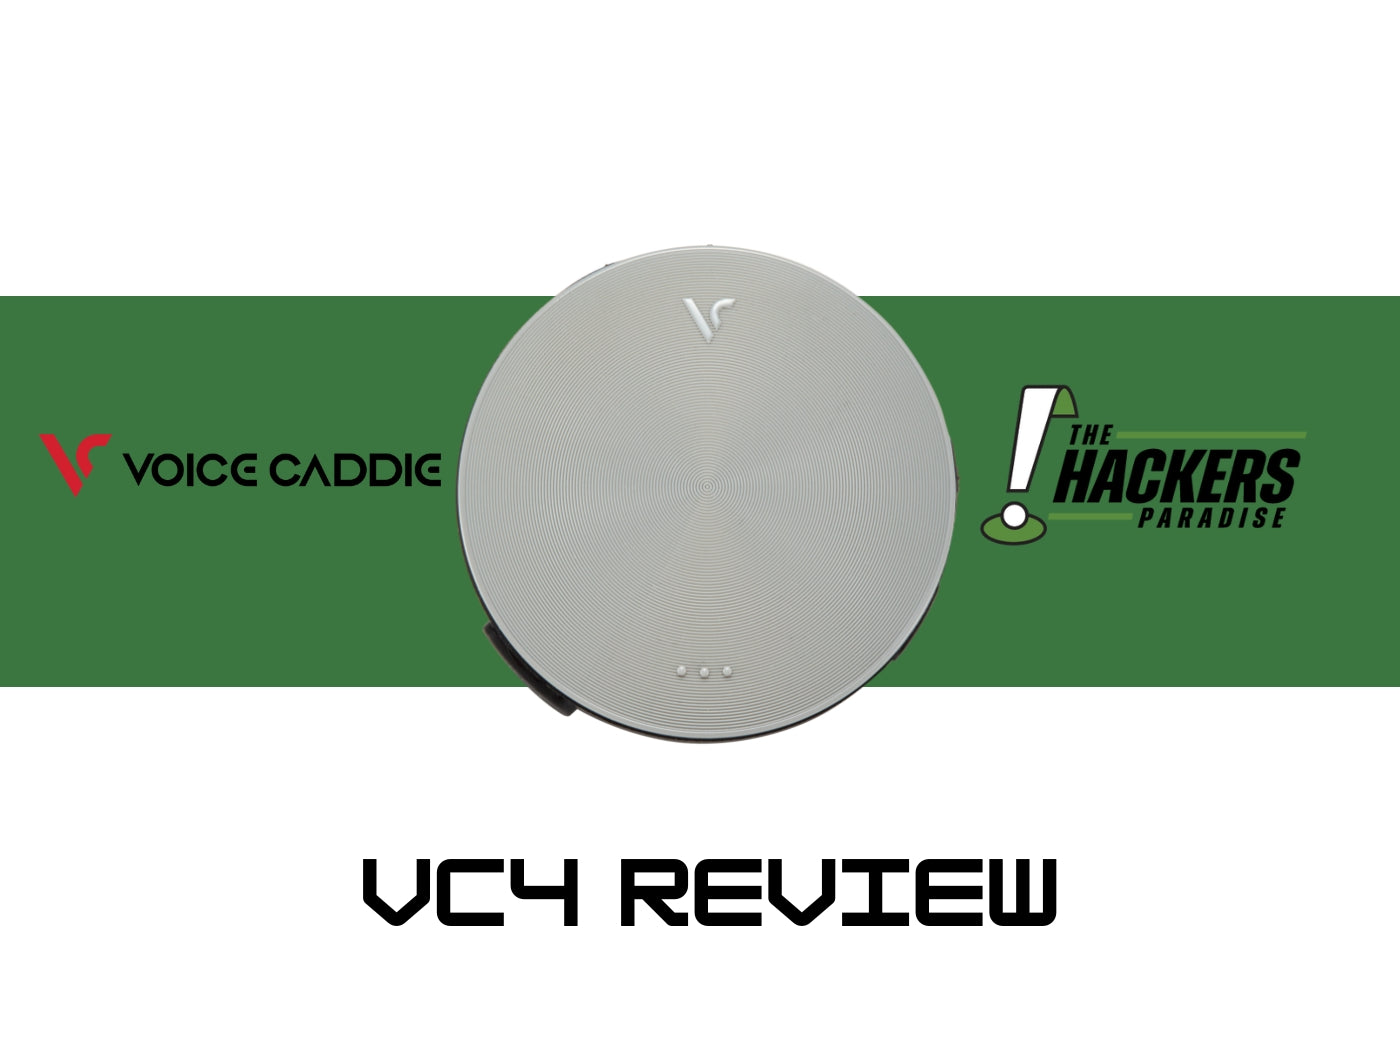 hacker's paradise review of voice caddie vc4 golf voice gps